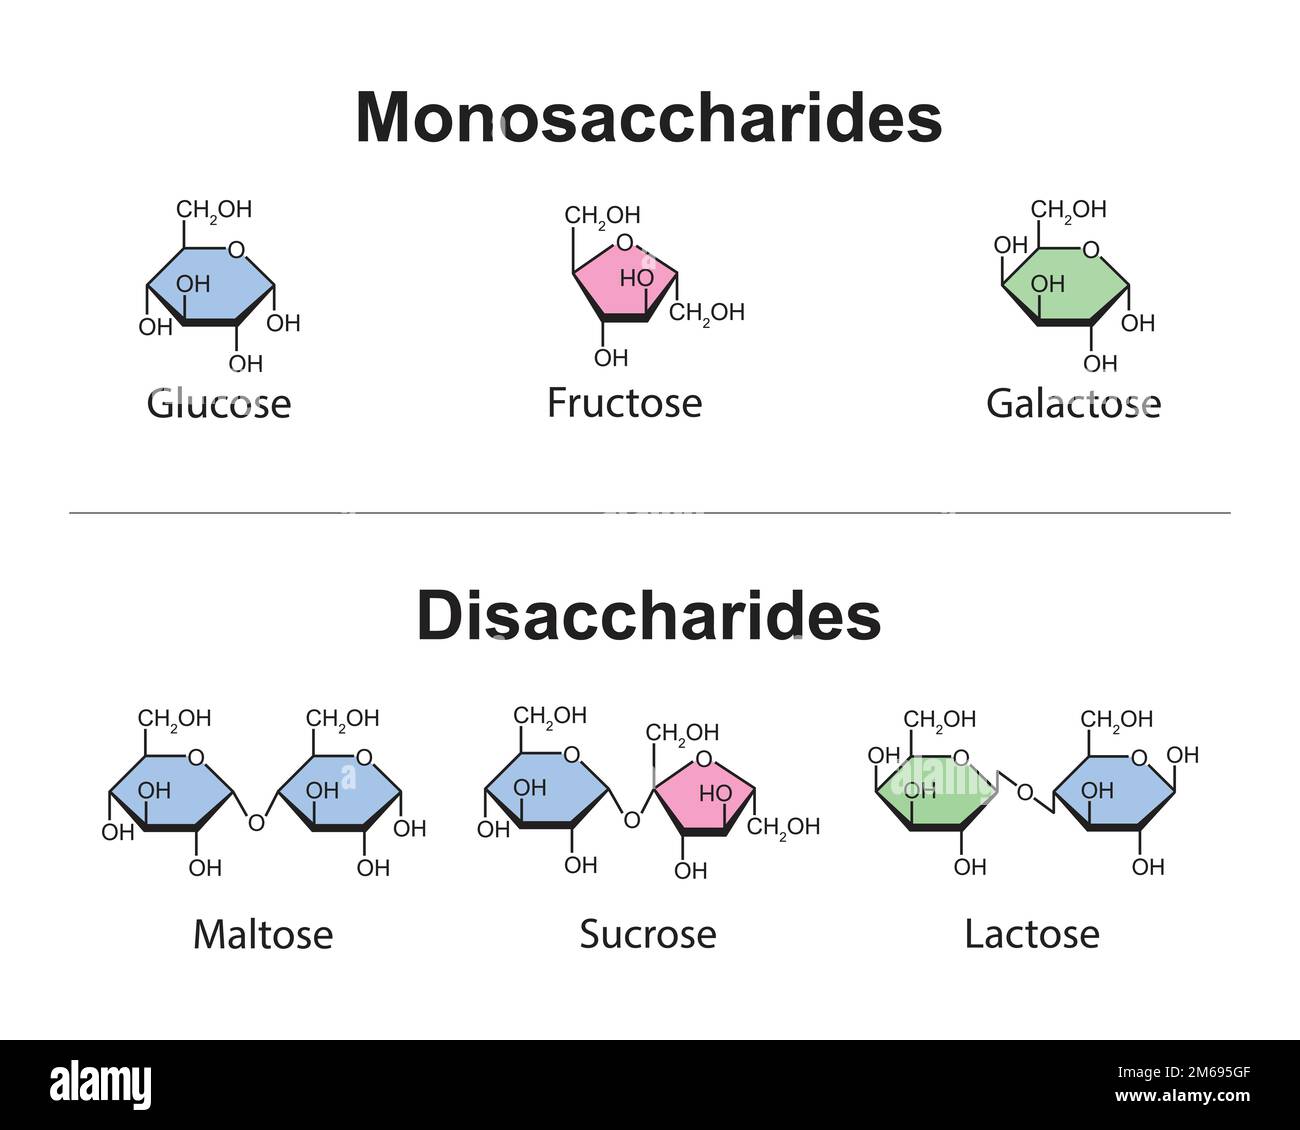 Monosaccharides and Disaccharides Scientific design. vector illustration. Stock Vector